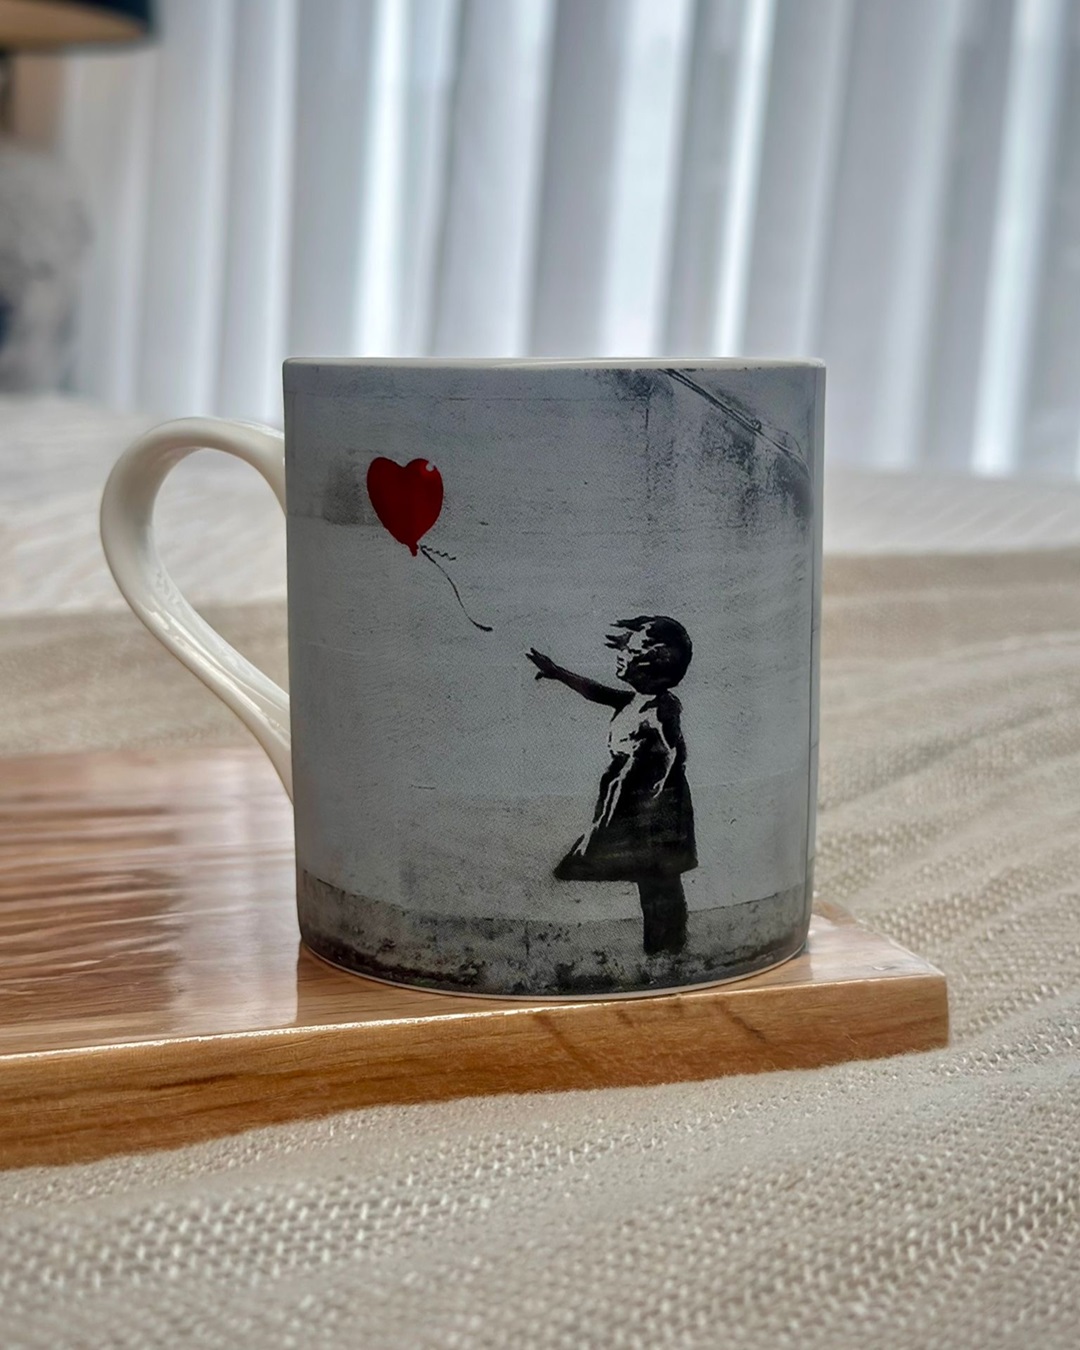 Mug with image of little girl and balloon floating away